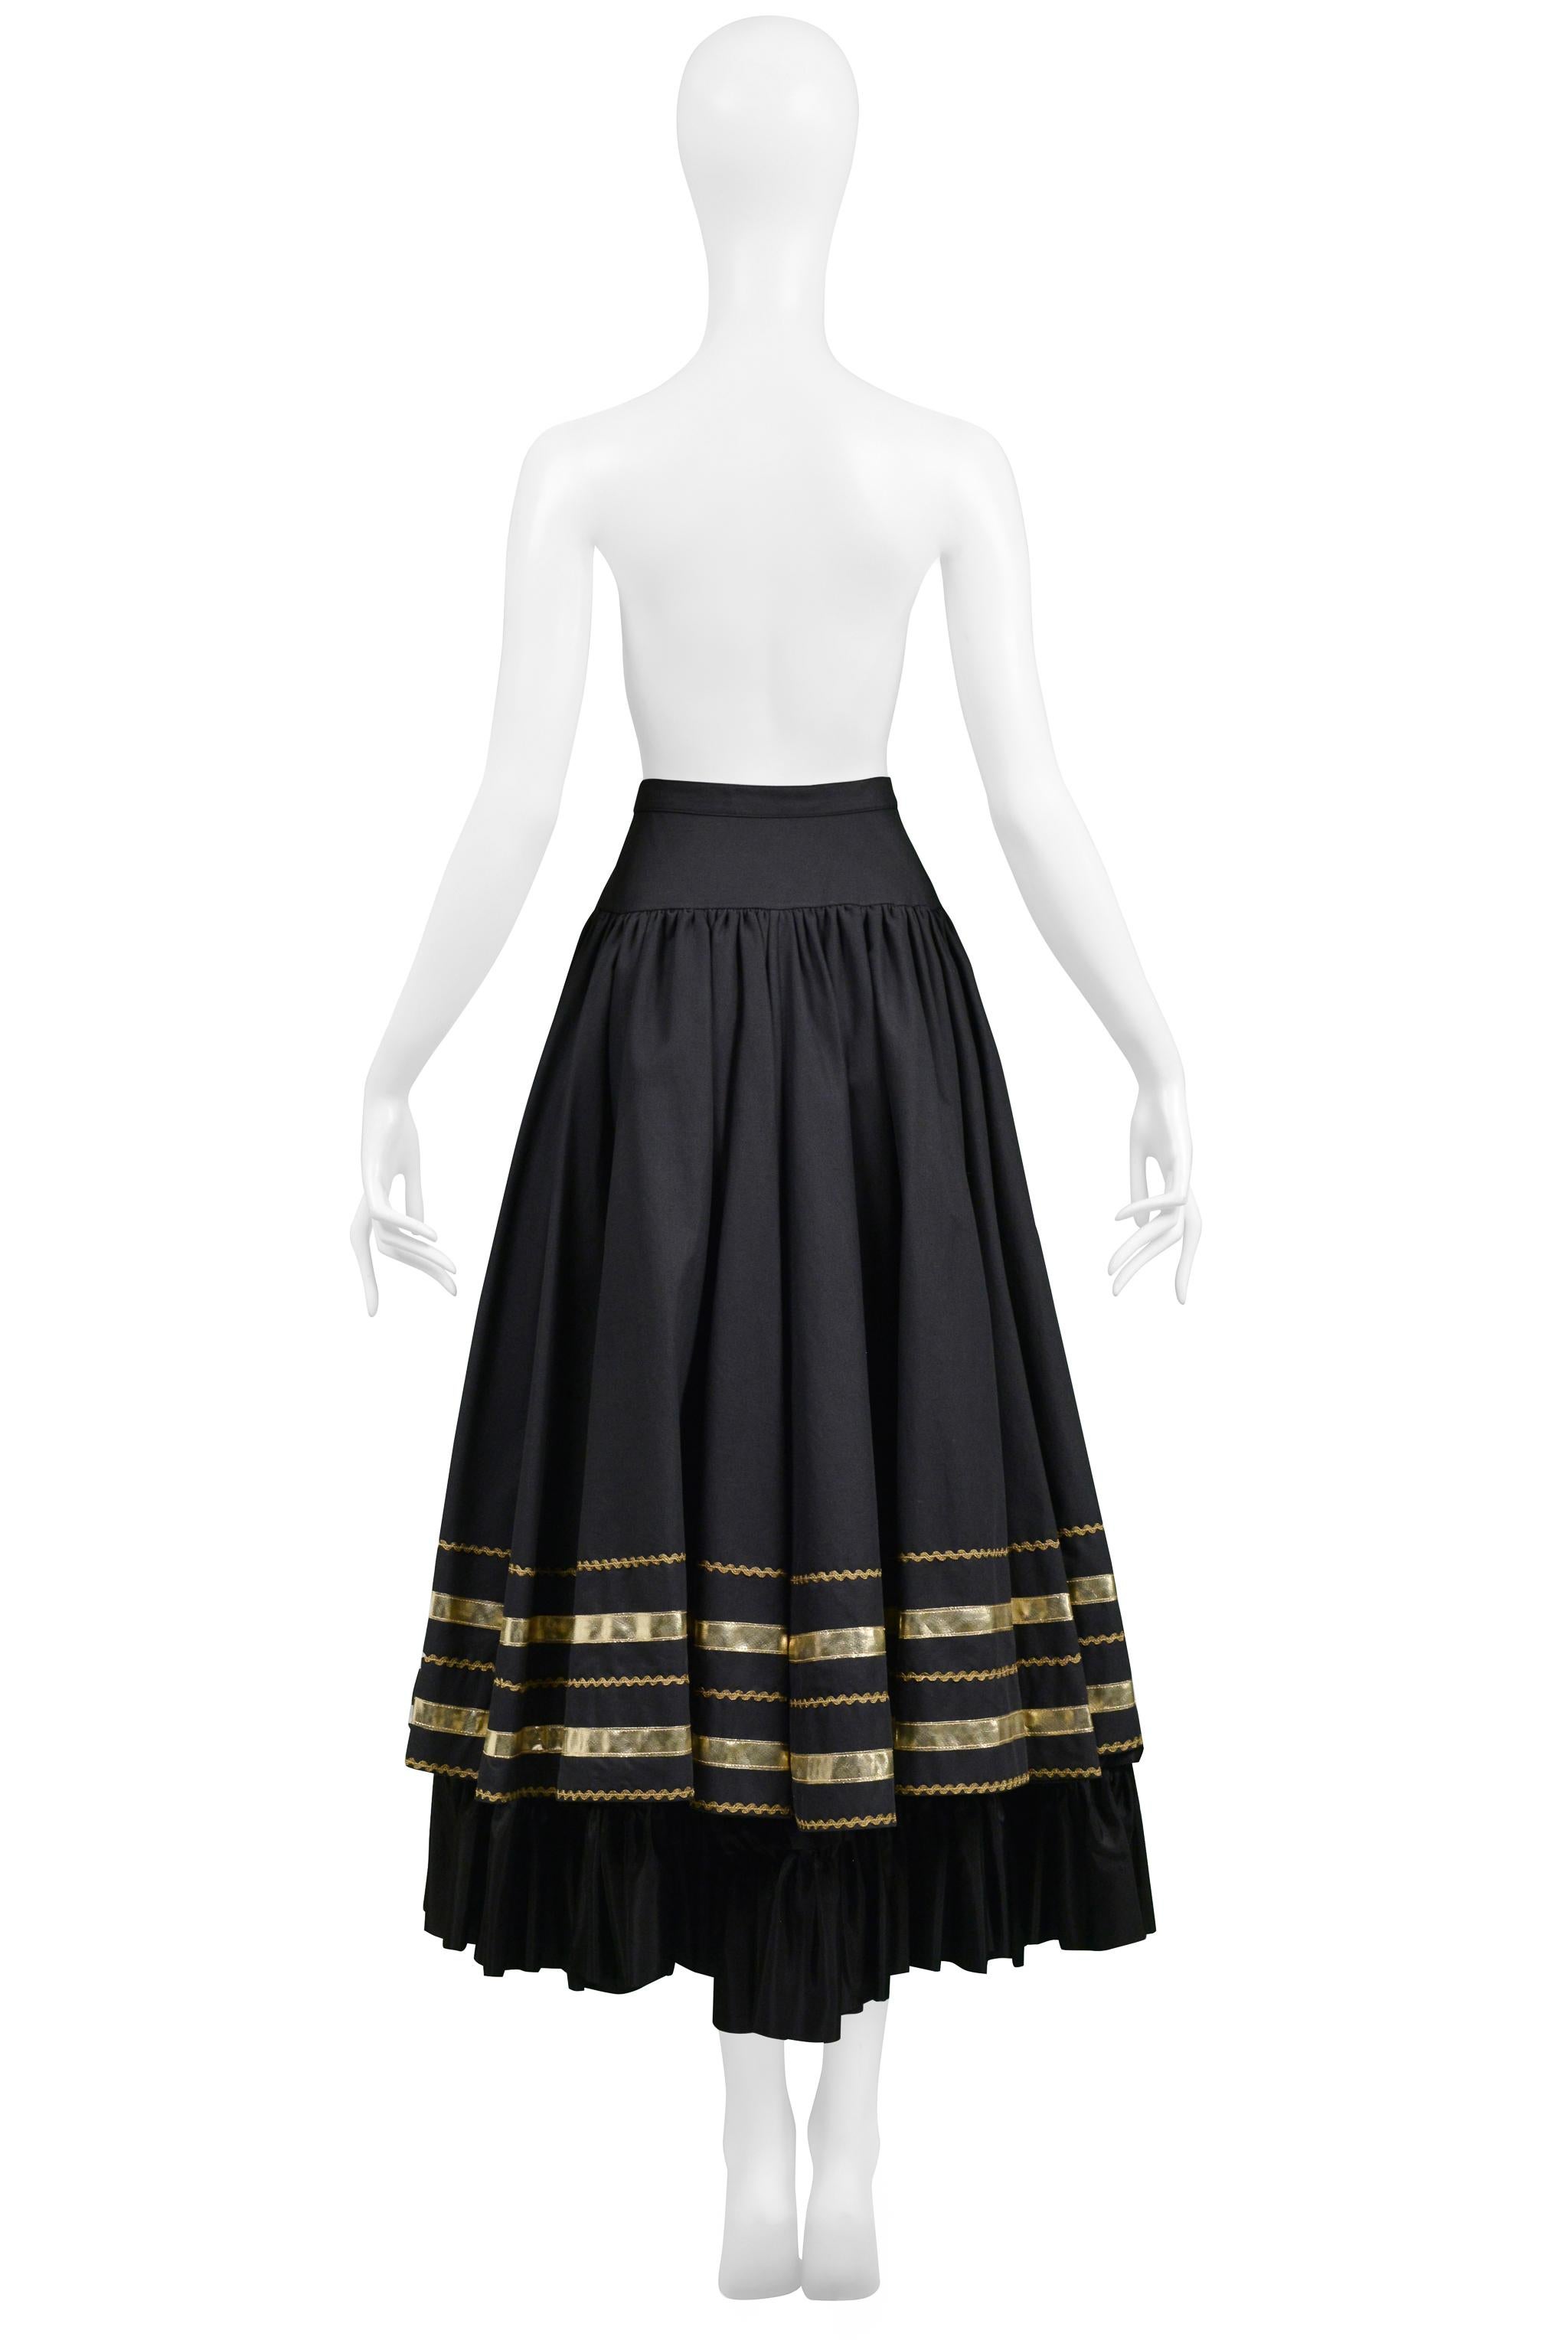 Yves Saint Laurent Ysl Black & Gold Corset Top & Fancy Peasant Skirt 1970s For Sale 6